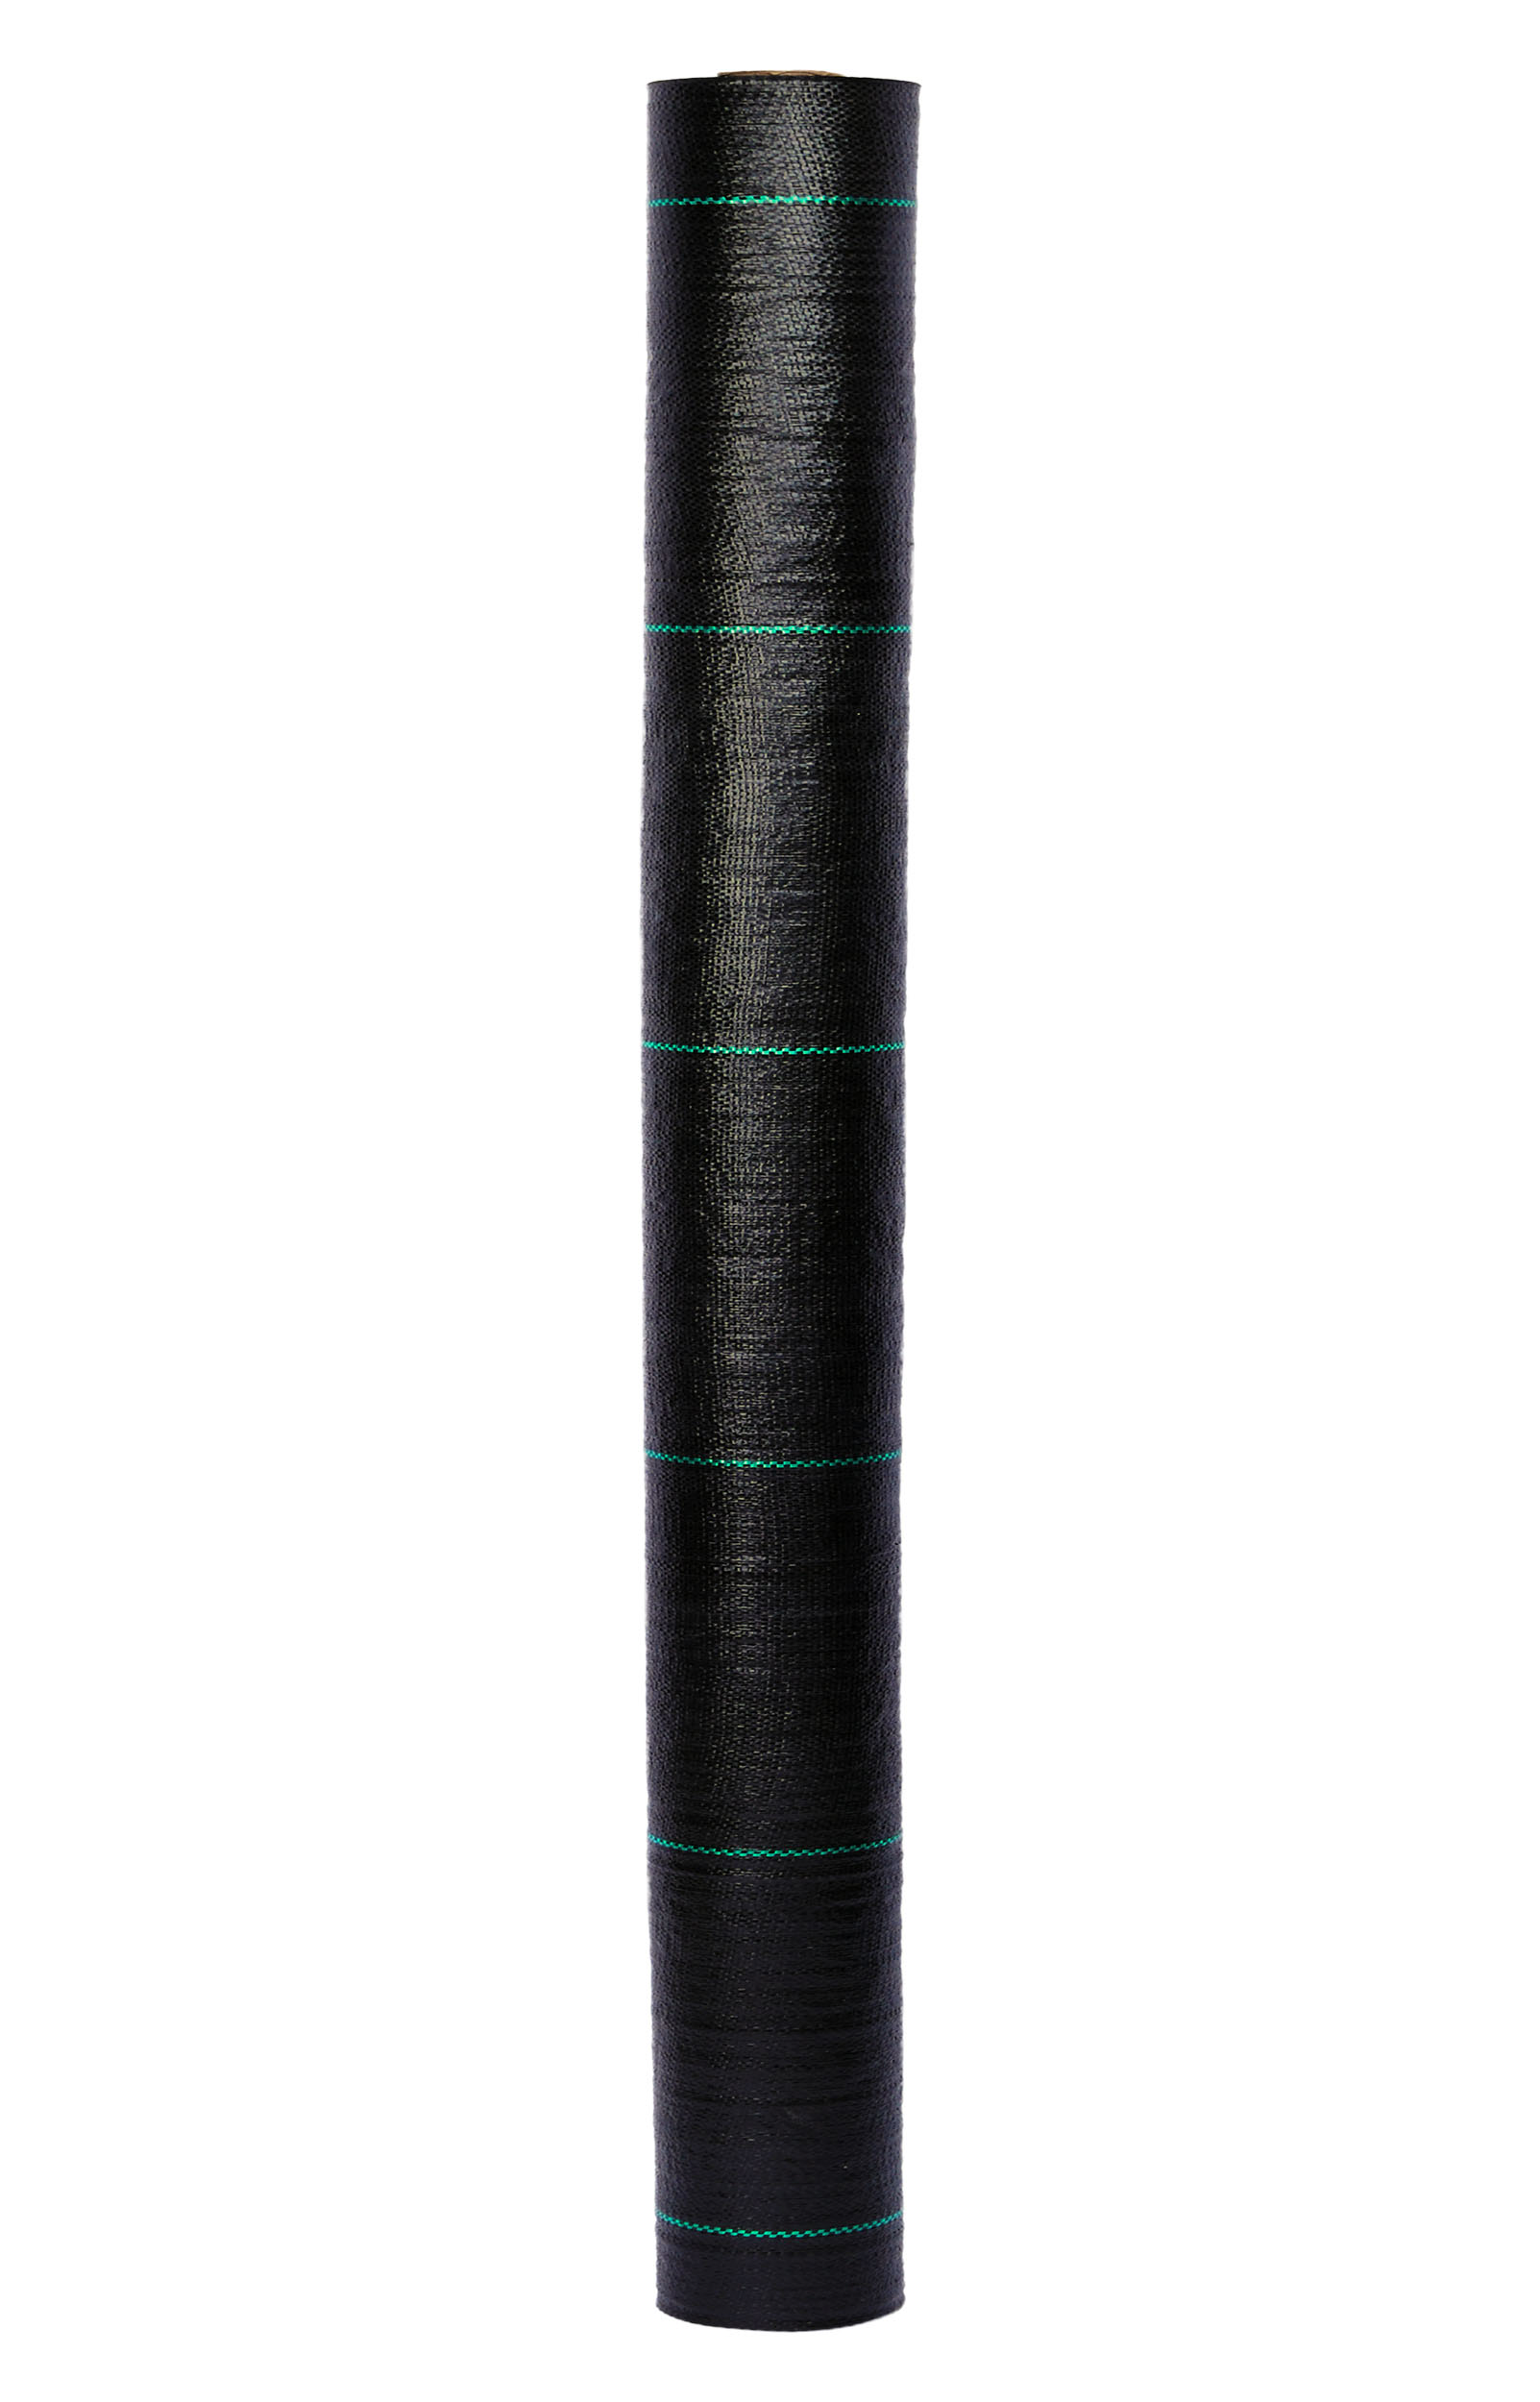 Agrotkanina czarna 70g 1,1X10 m